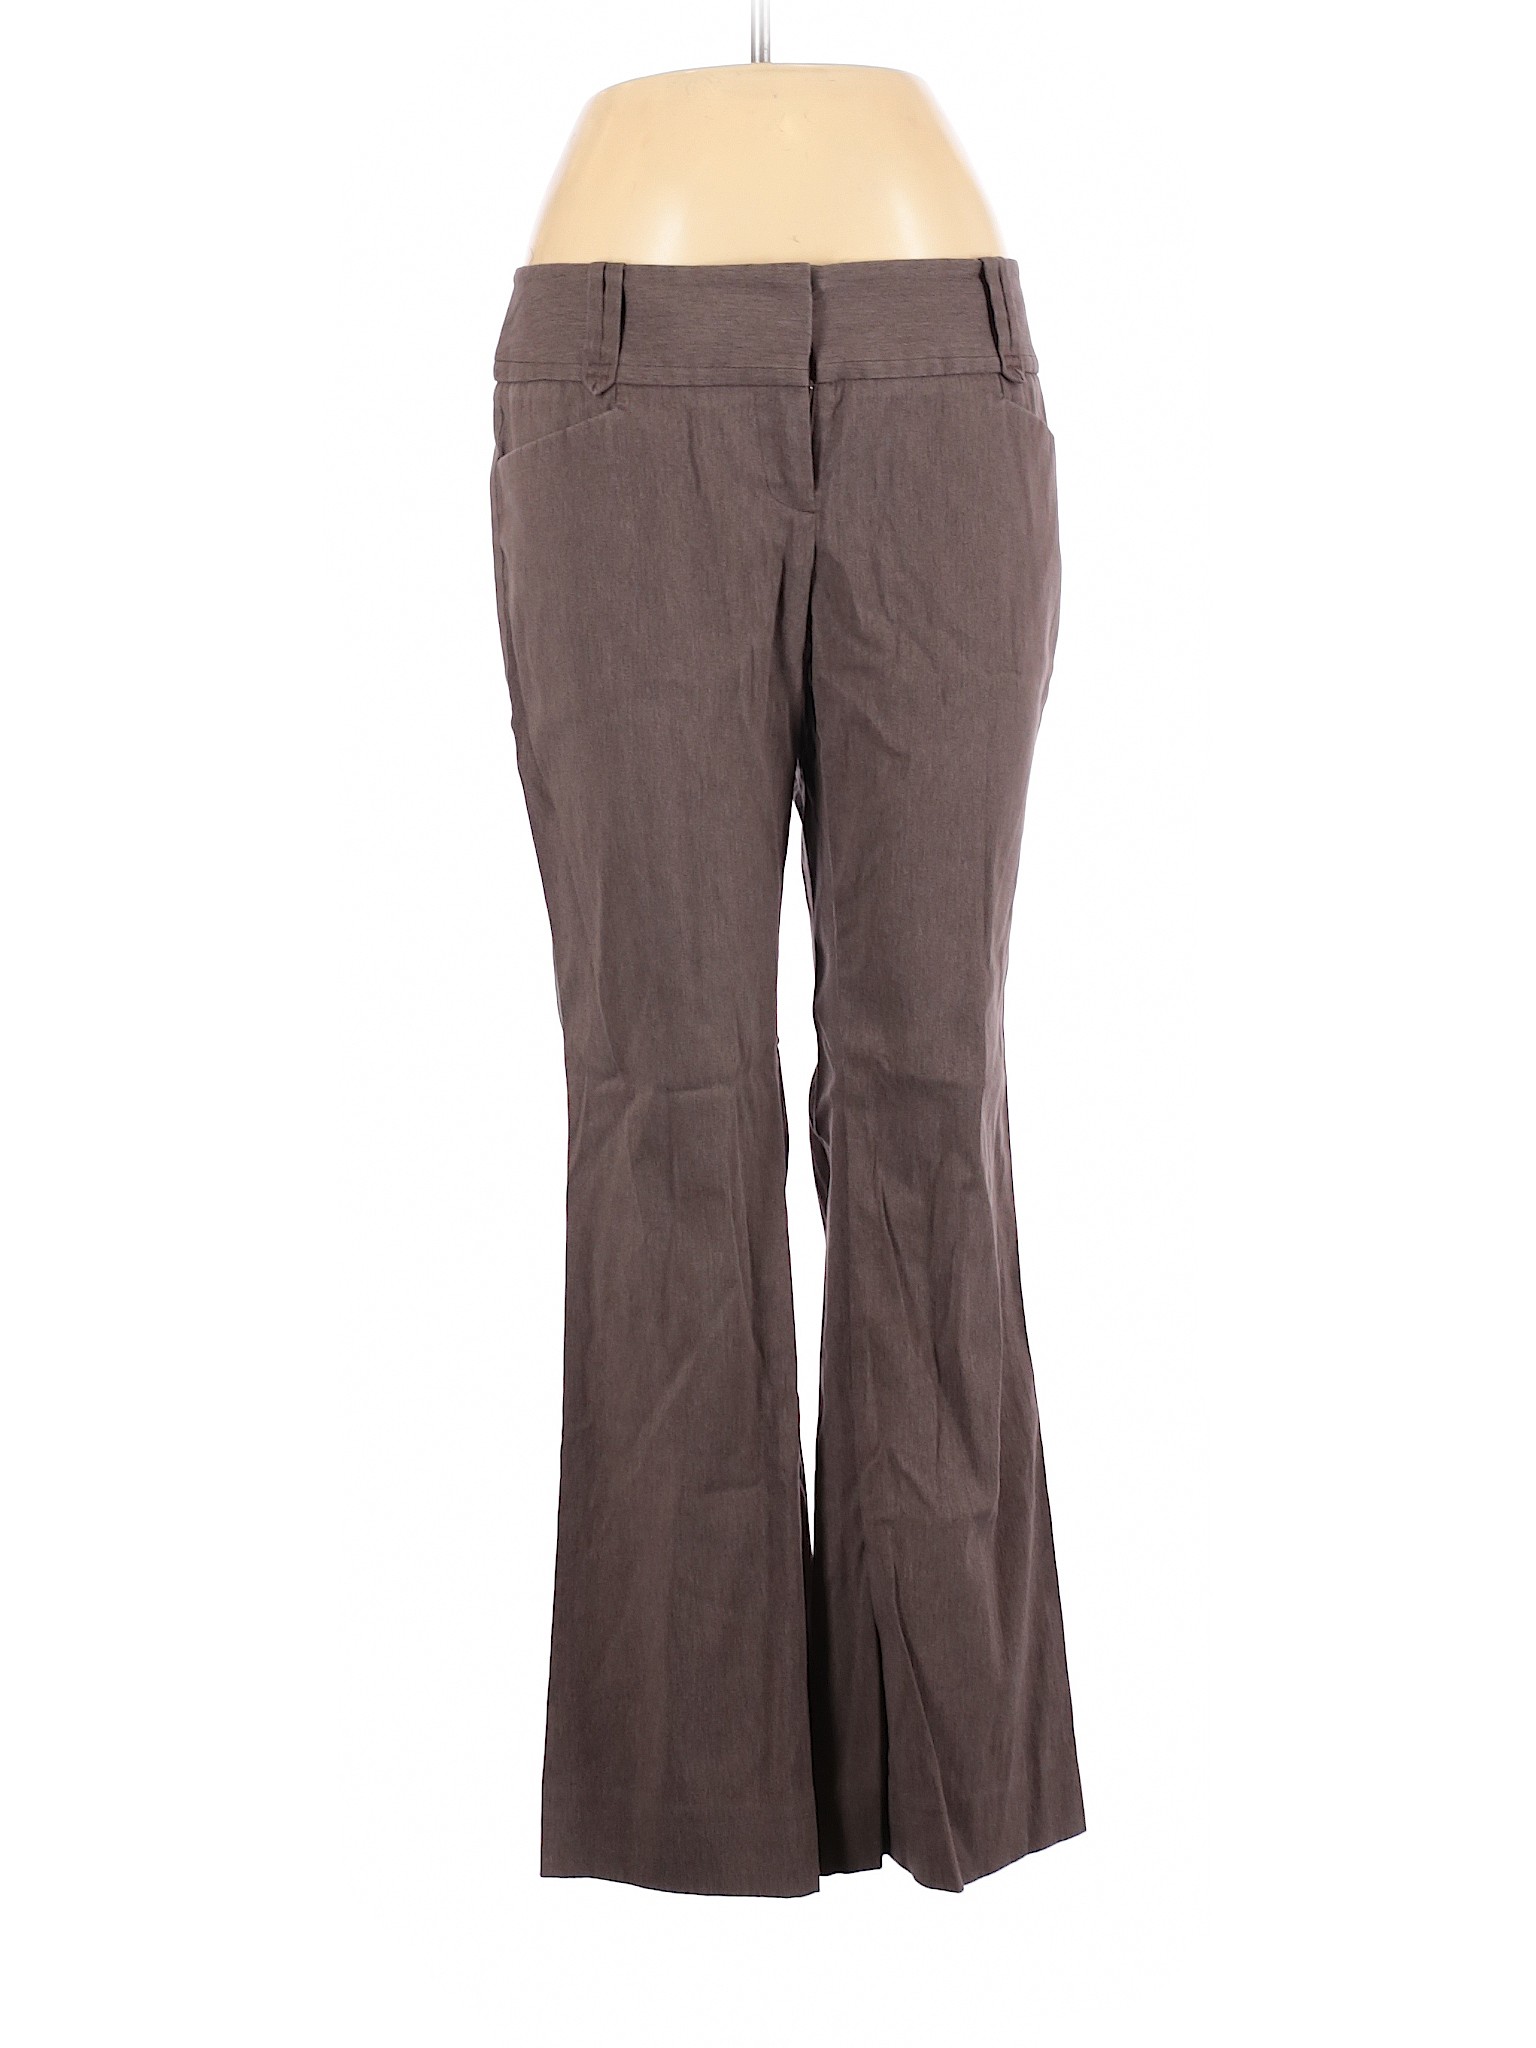 The Limited Women Brown Dress Pants 8 | eBay